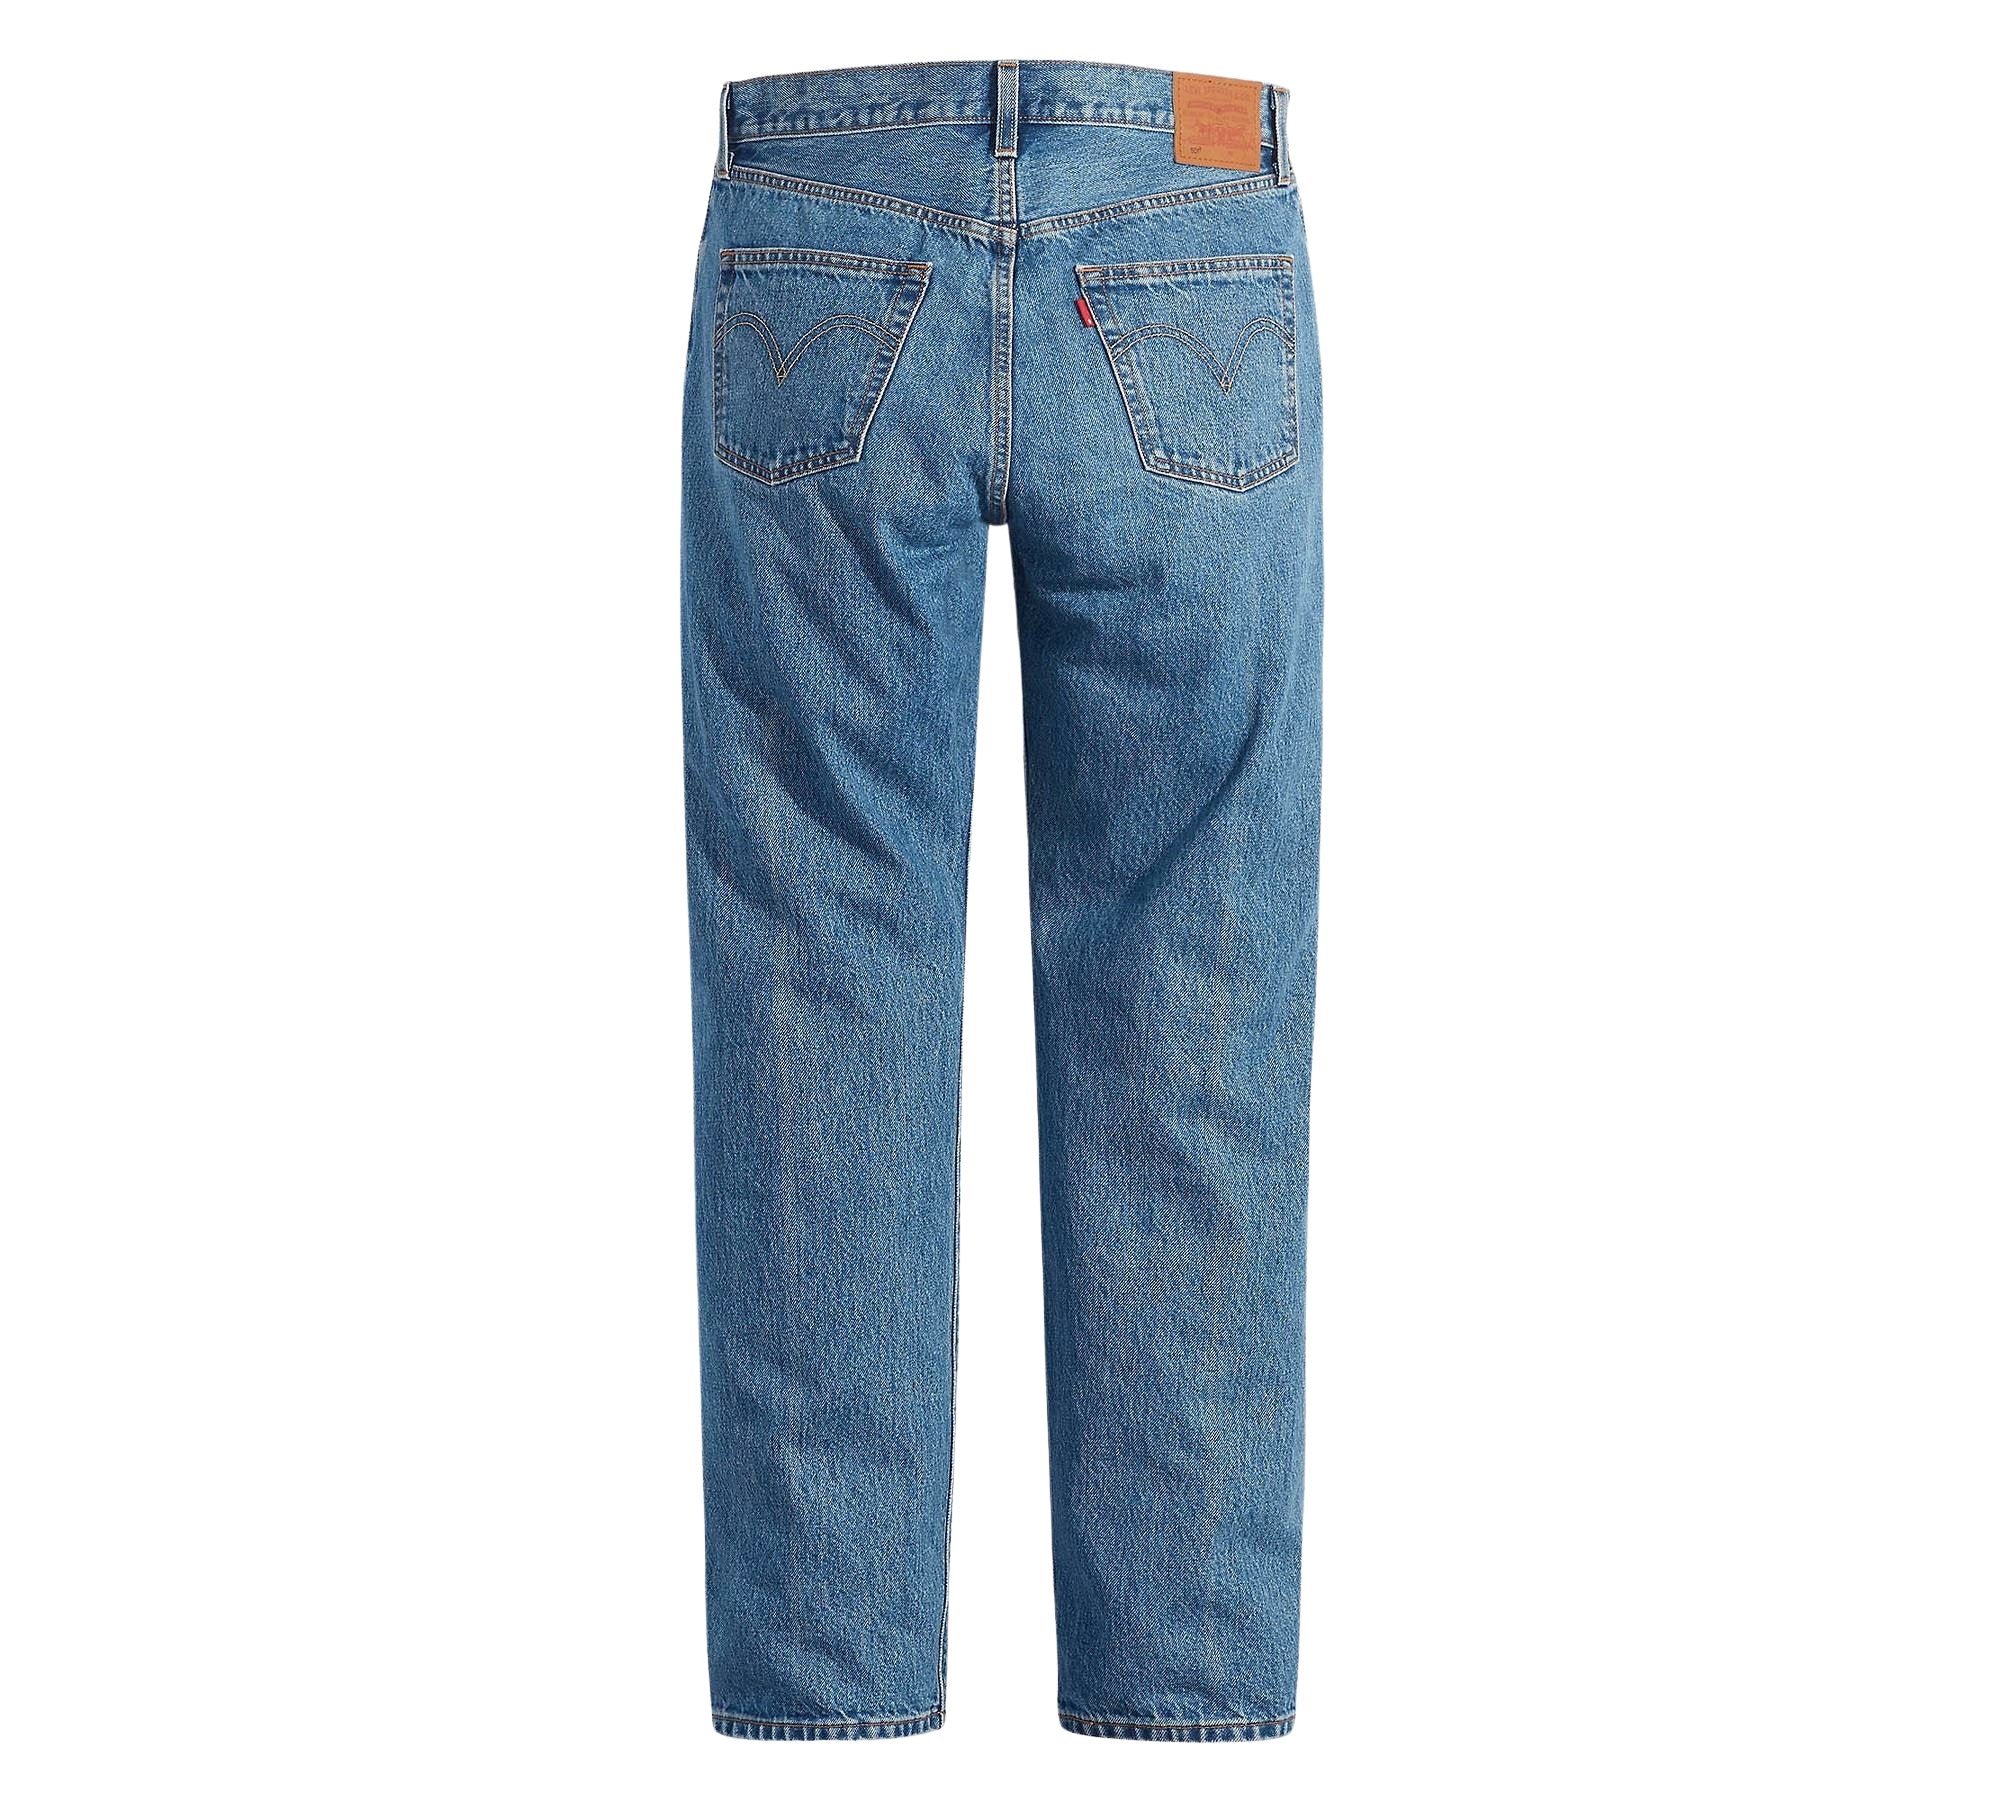 4 Pack - Vintage LEVI'S Classic Blue Zip Fly Jeans - Waist 30 - Length 34 - Vintage Superstore Online